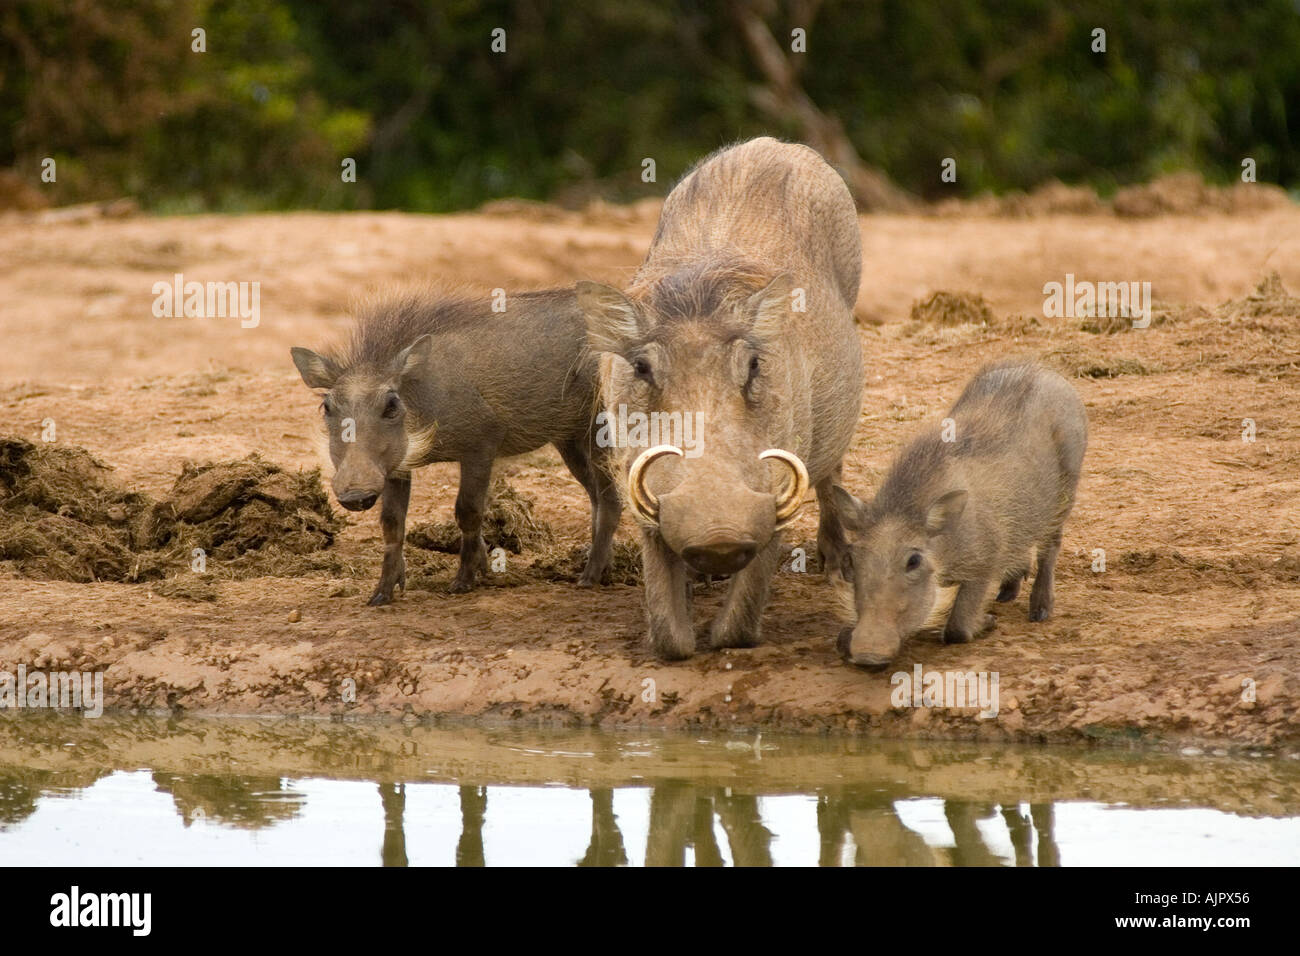 south africa Addo Elephant National Park warthog Stock Photo